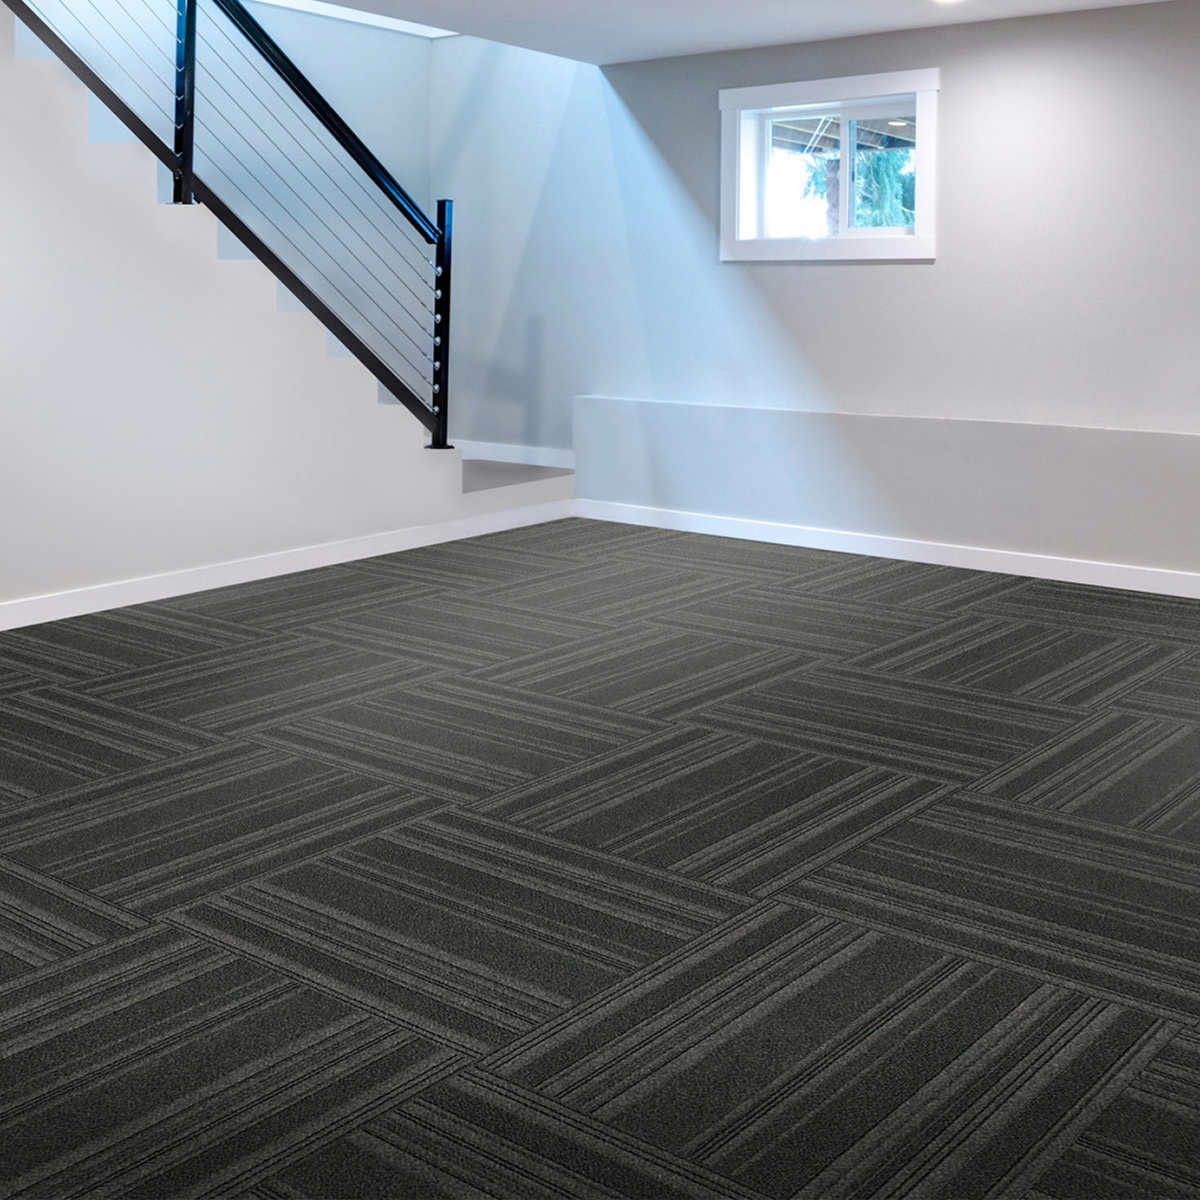 Couture Premium Self Stick Carpet Tiles, Outdoor Carpet Tiles For Decks Canada